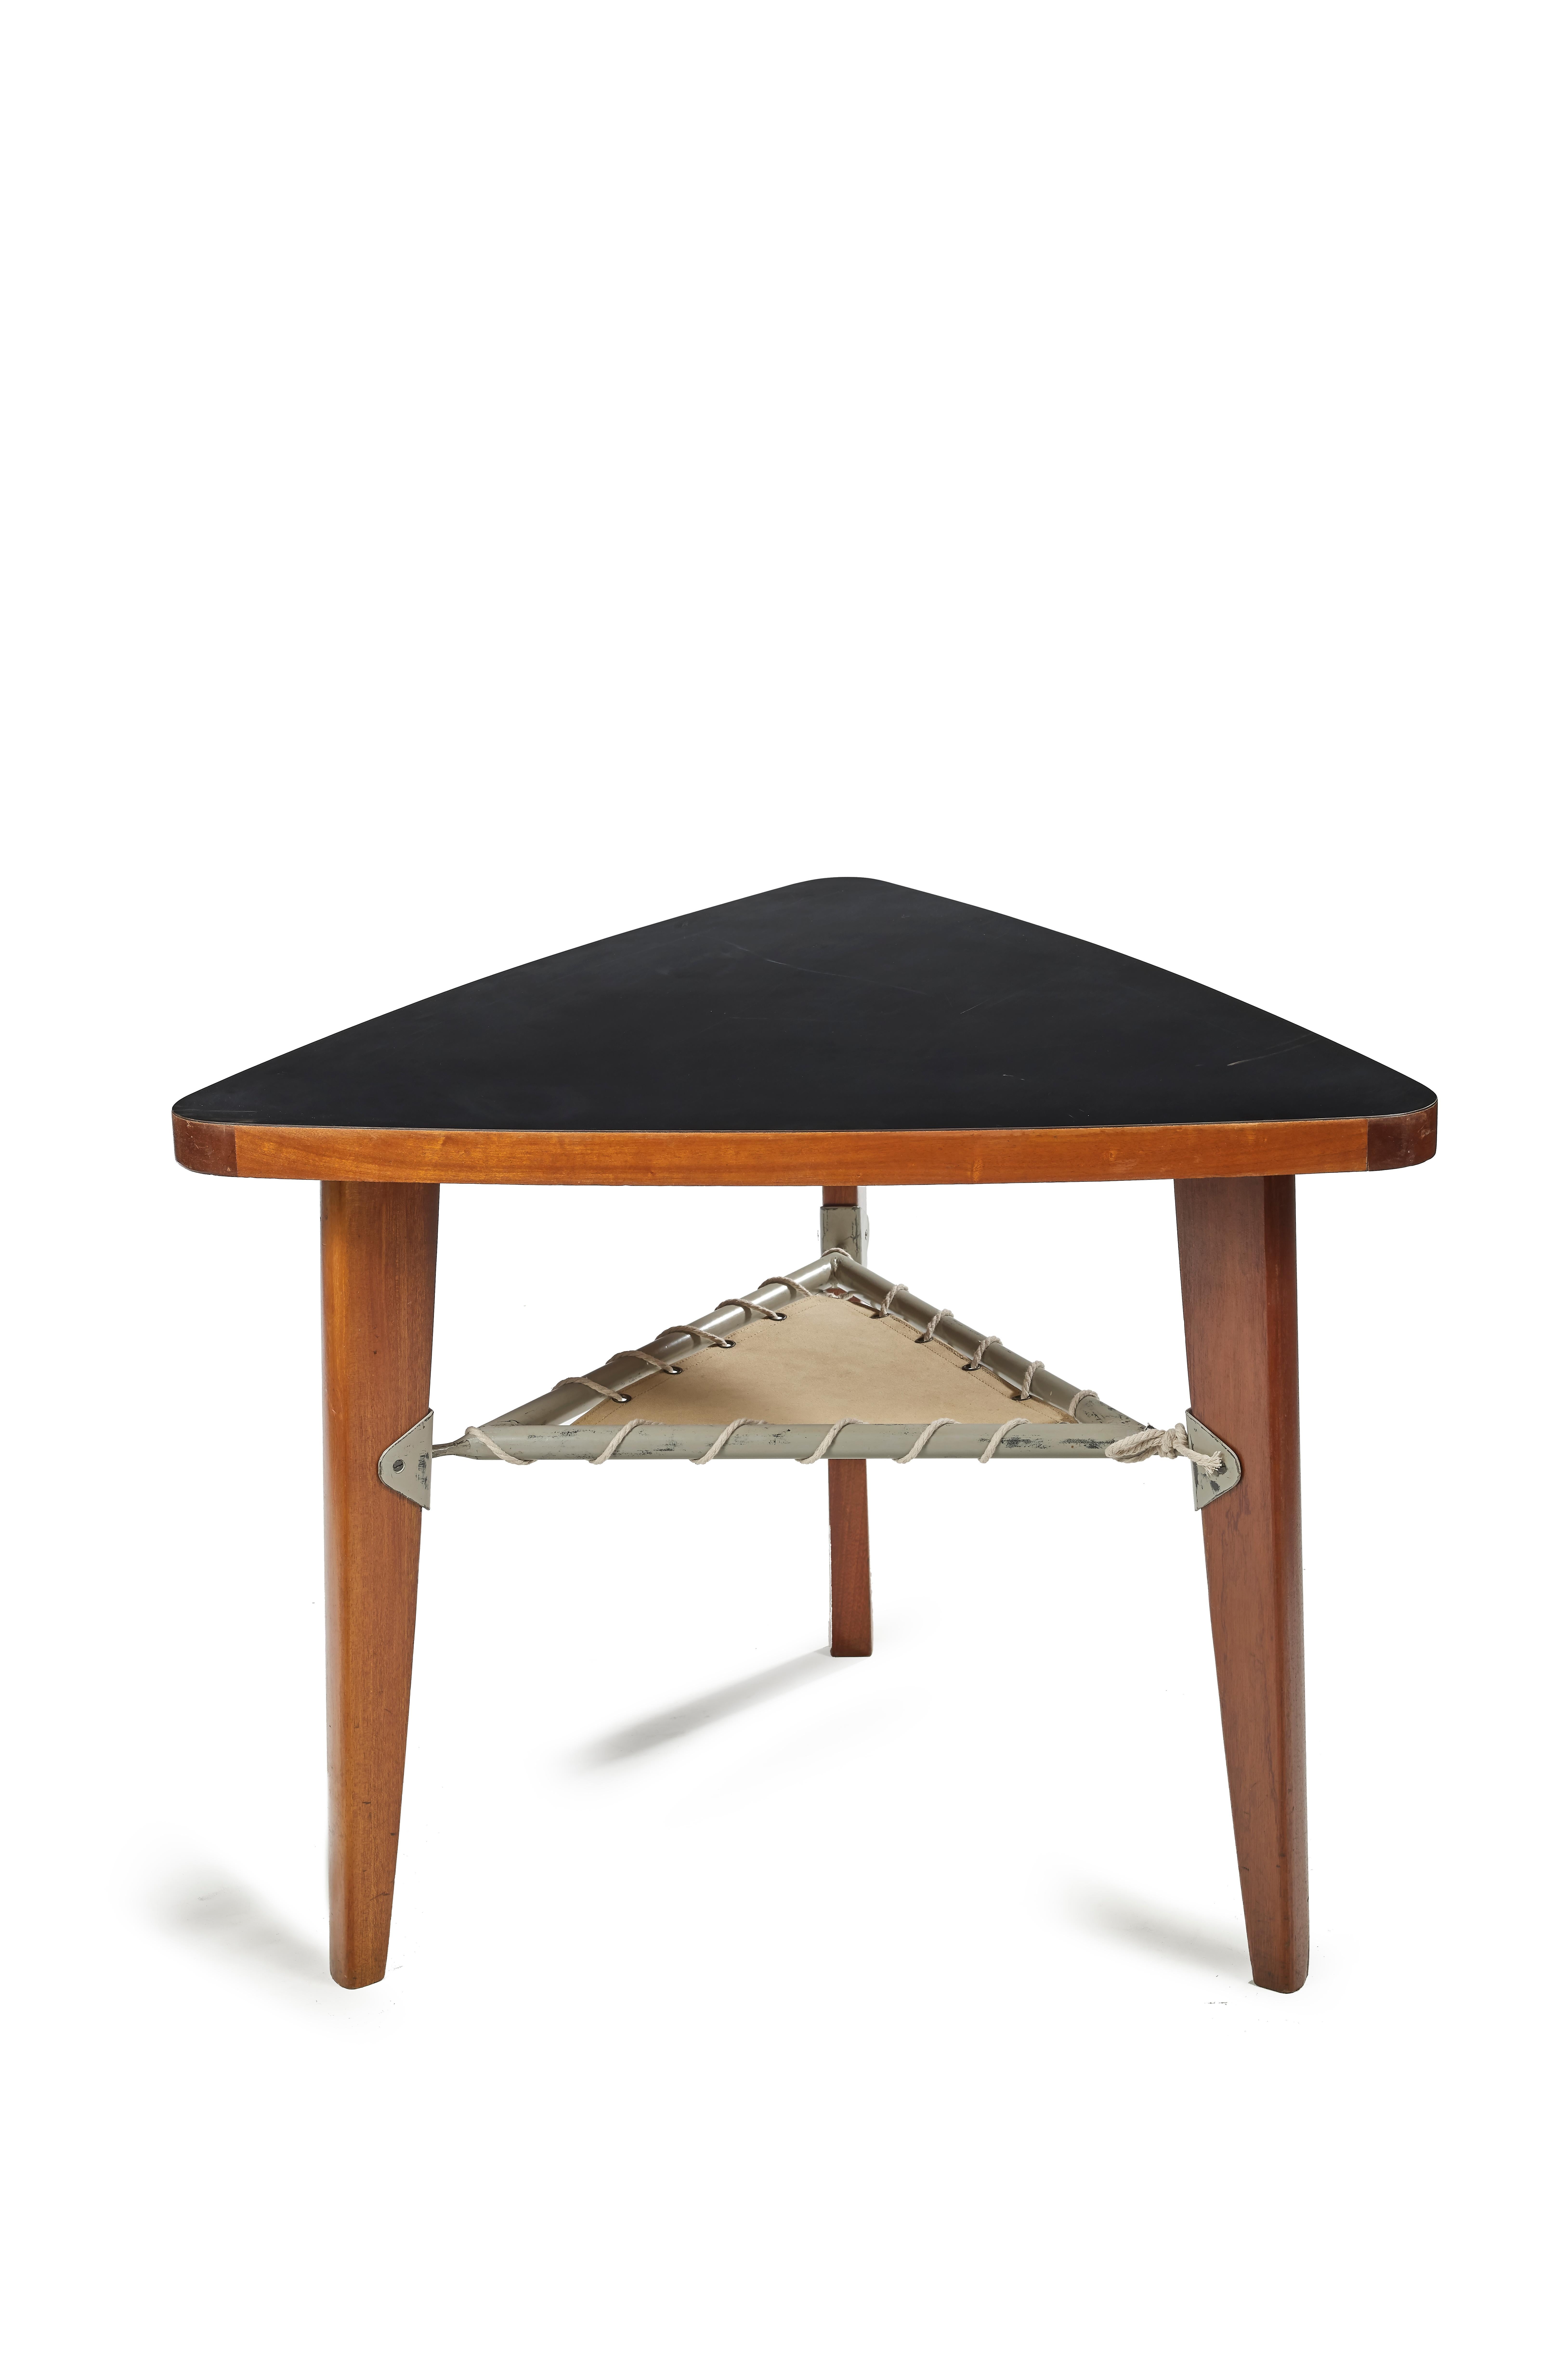 Pierre Jeanneret Pedestal Table, 1950 In Fair Condition For Sale In Paris, FR